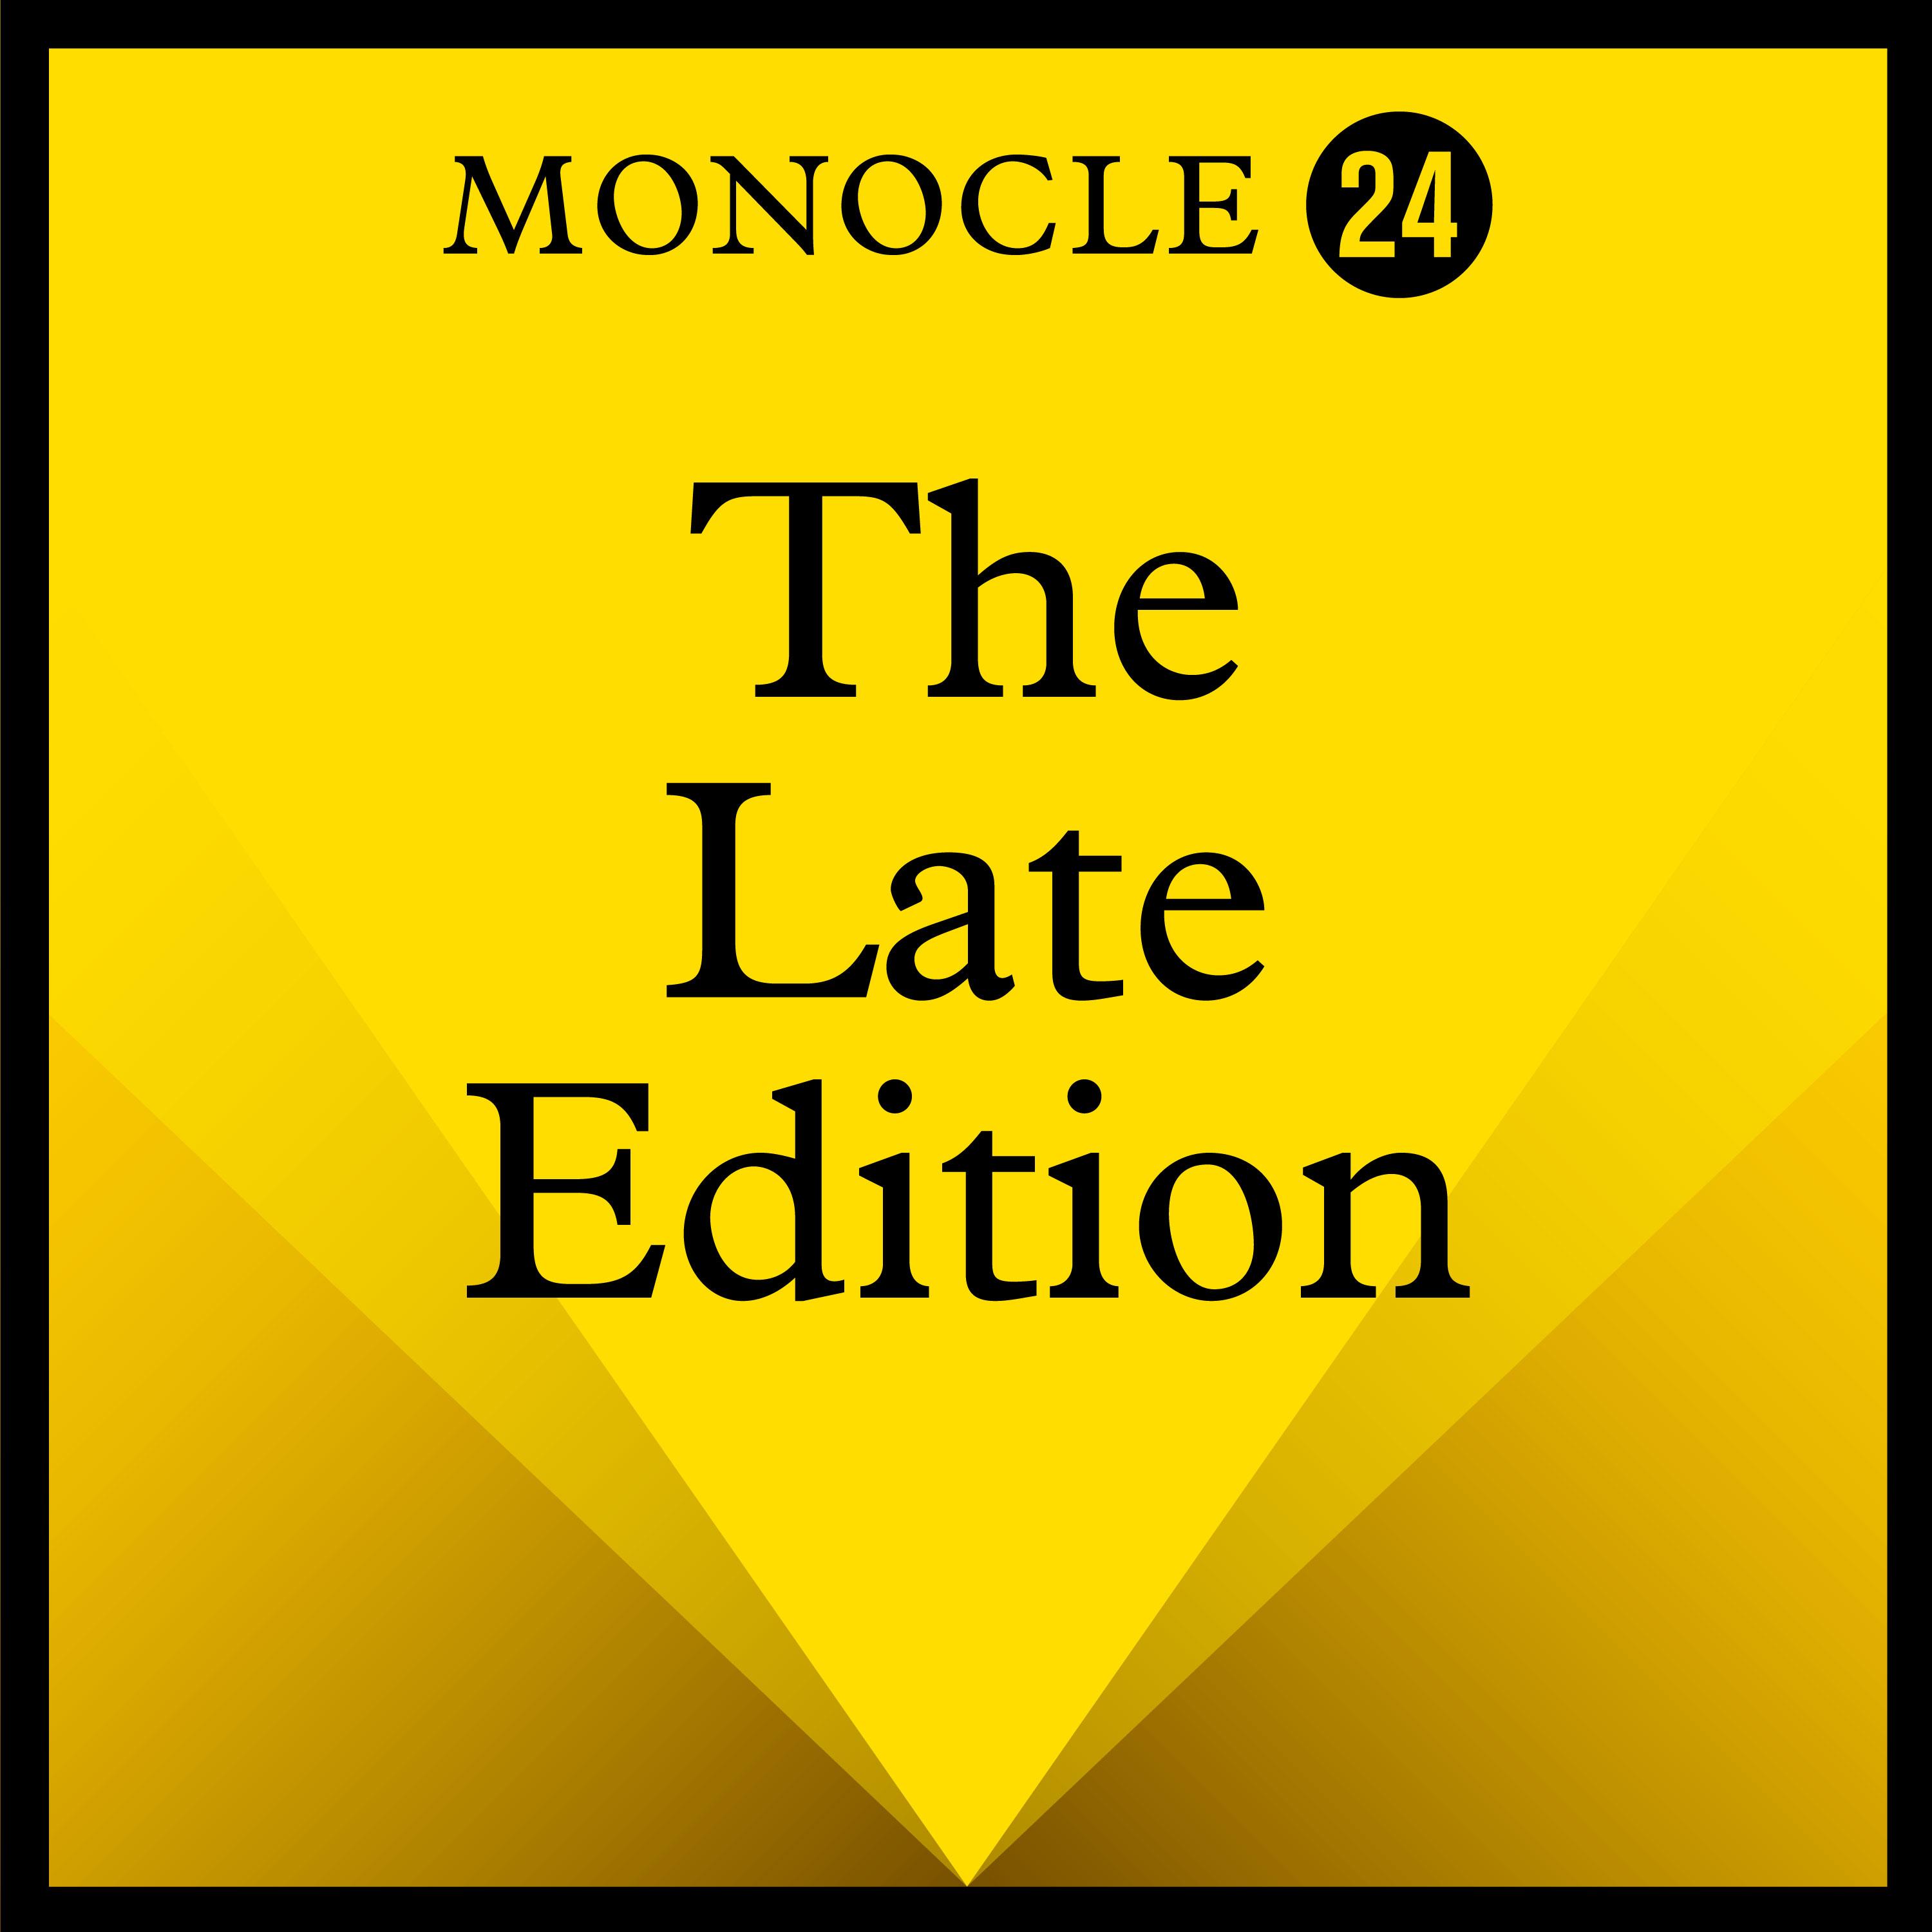 Monocle Radio: The Late Edition